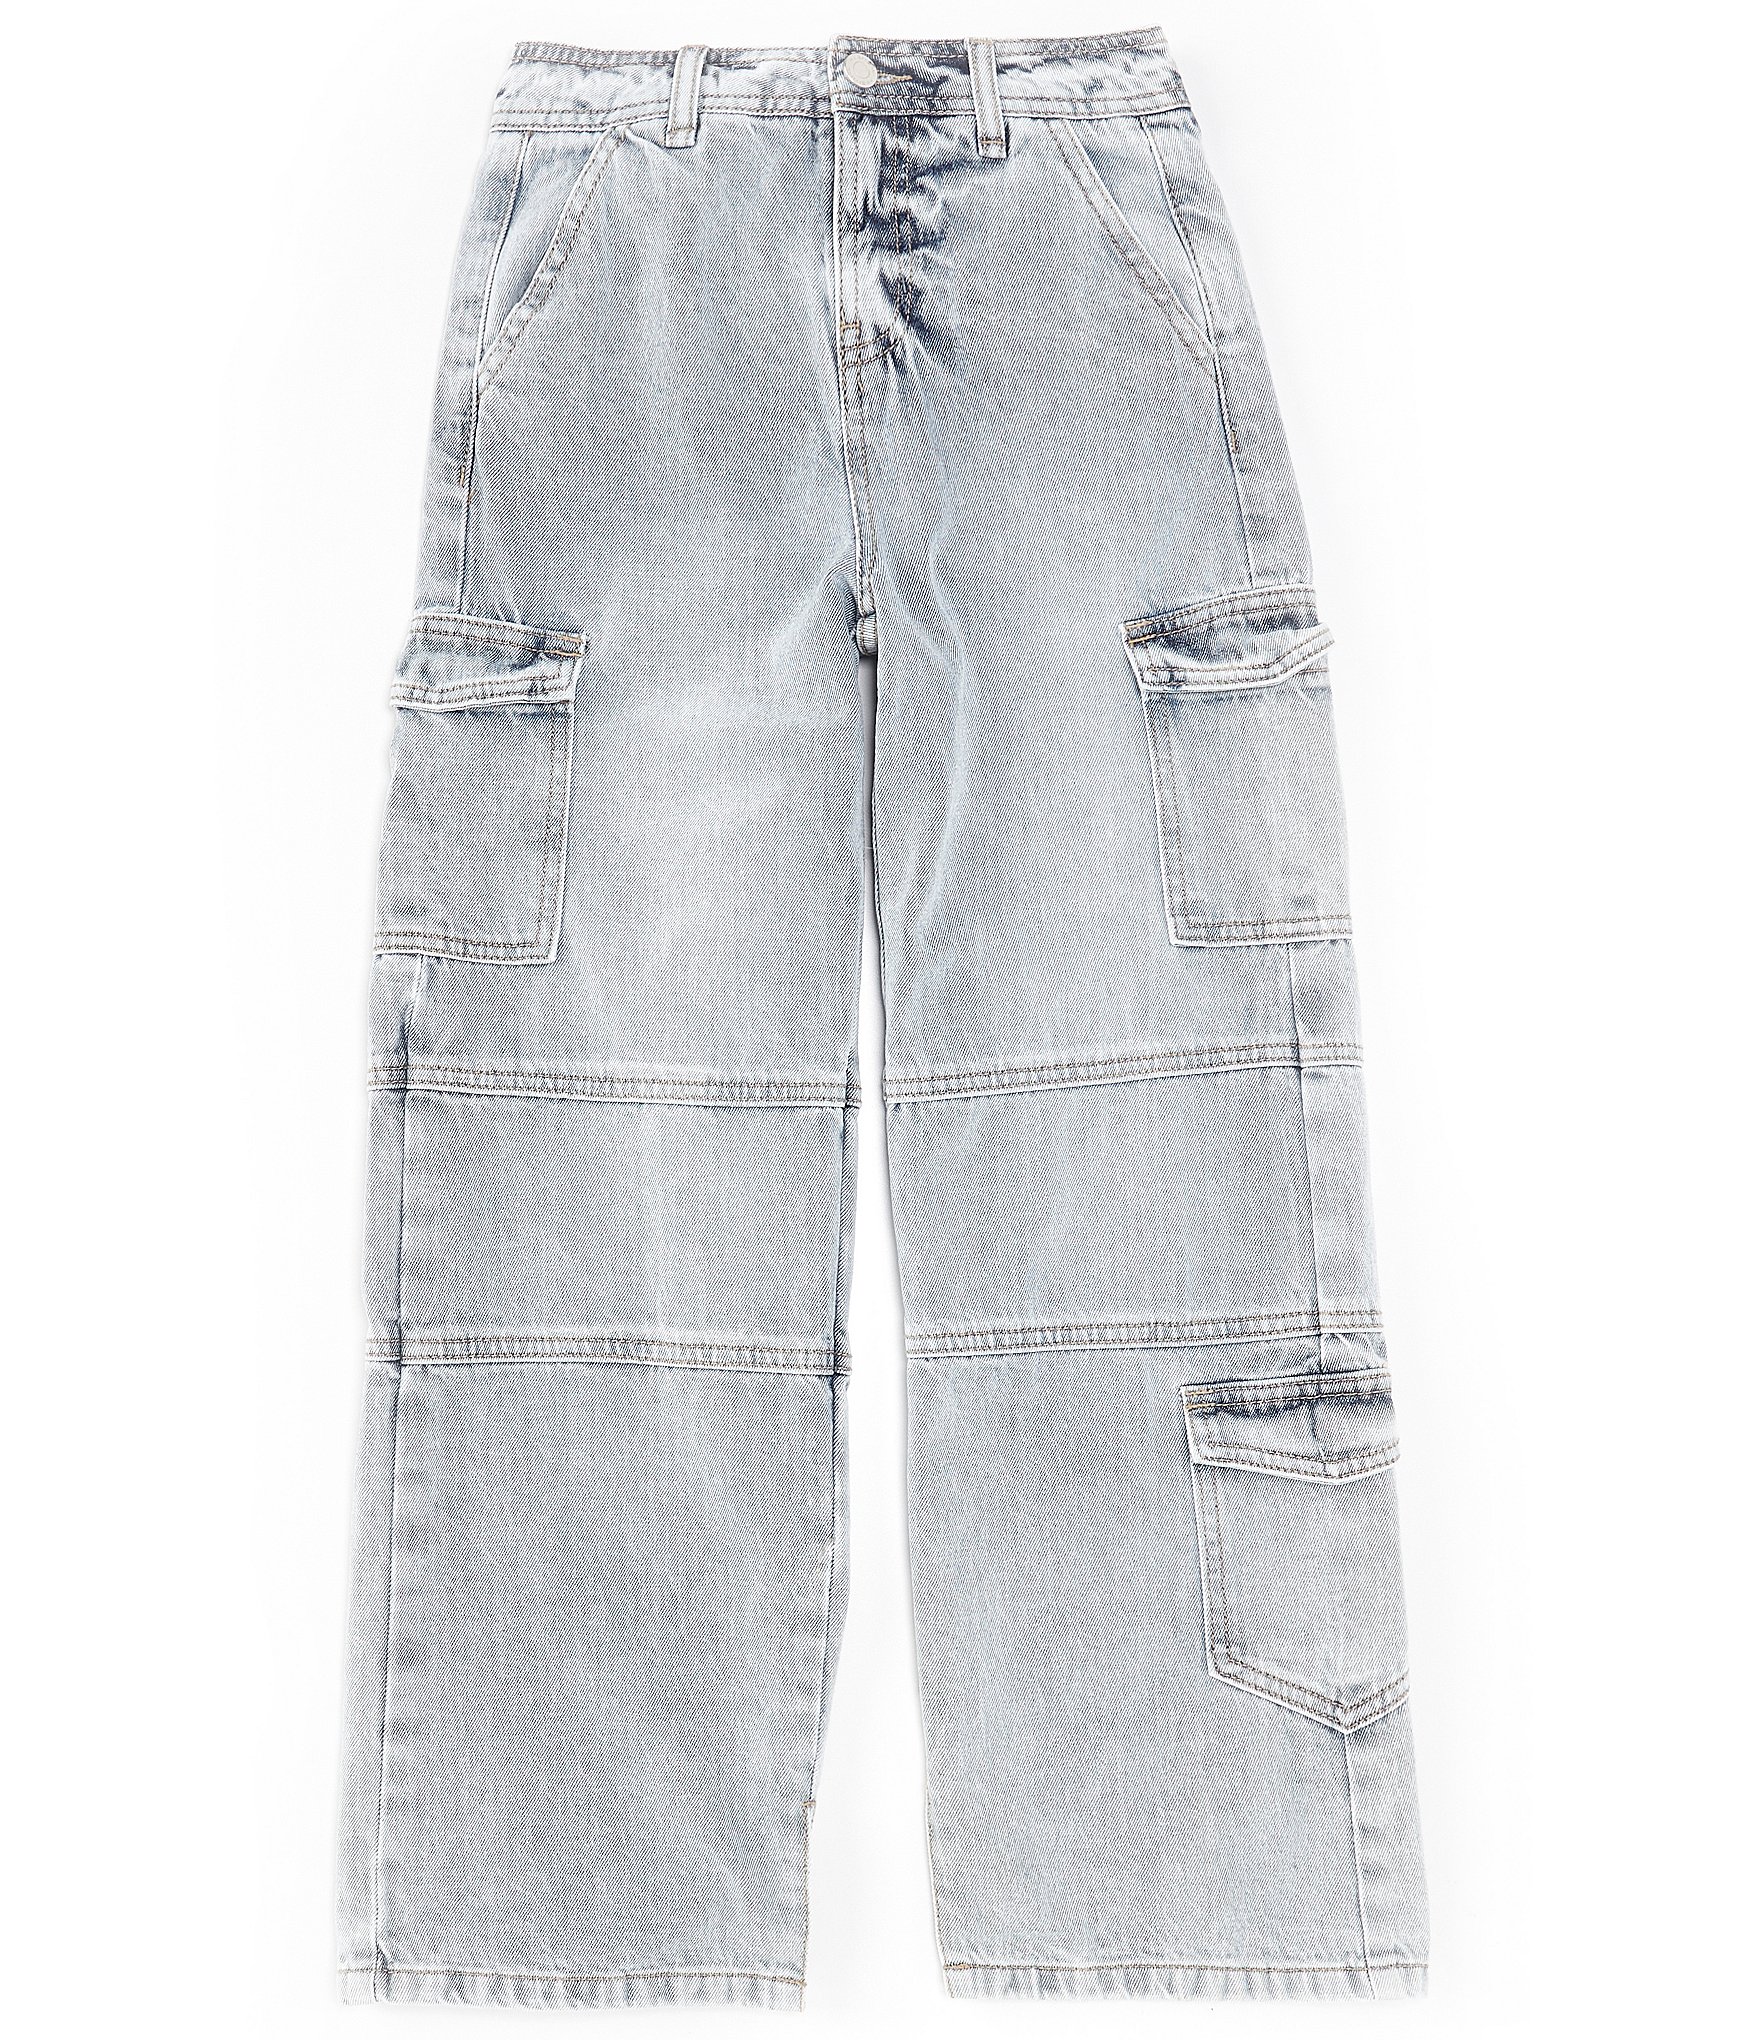 cargo pants: Kids | Dillard's